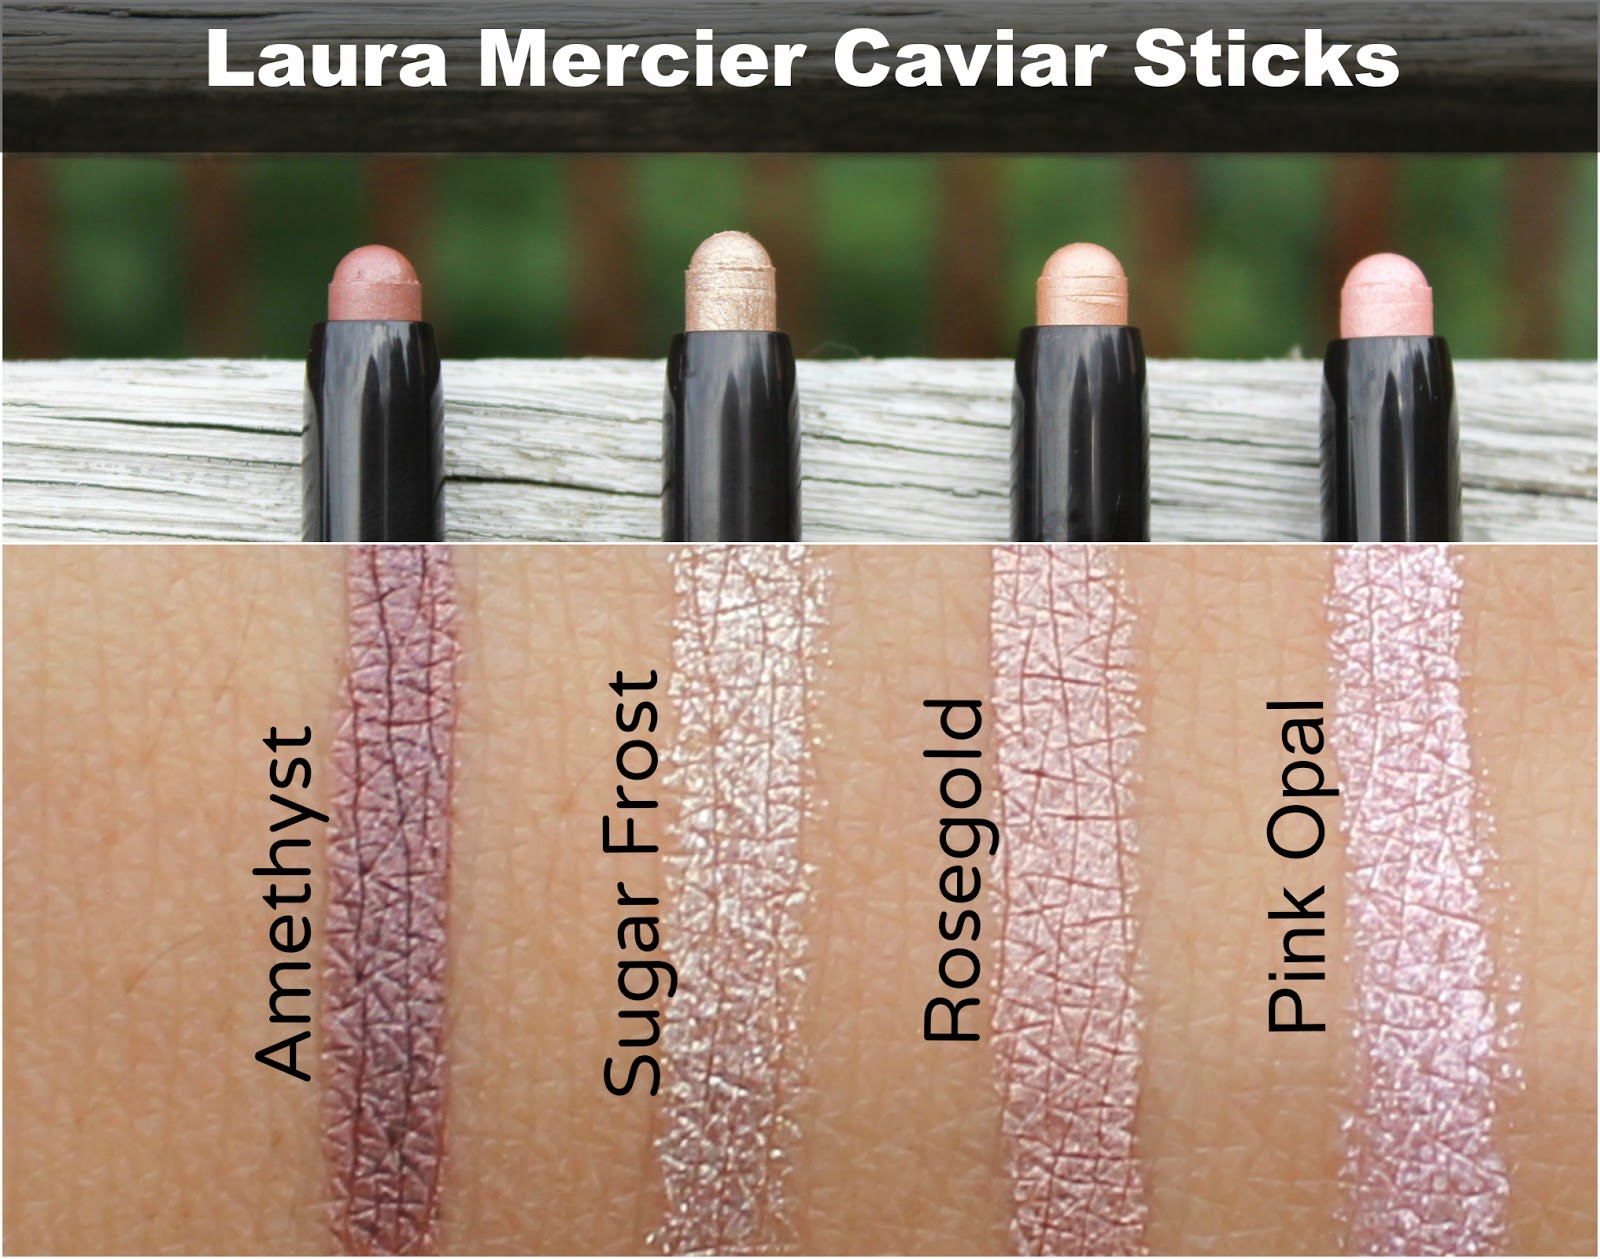 1. Laura Mercier Caviar Stick Eye Colour in Gold - wide 2